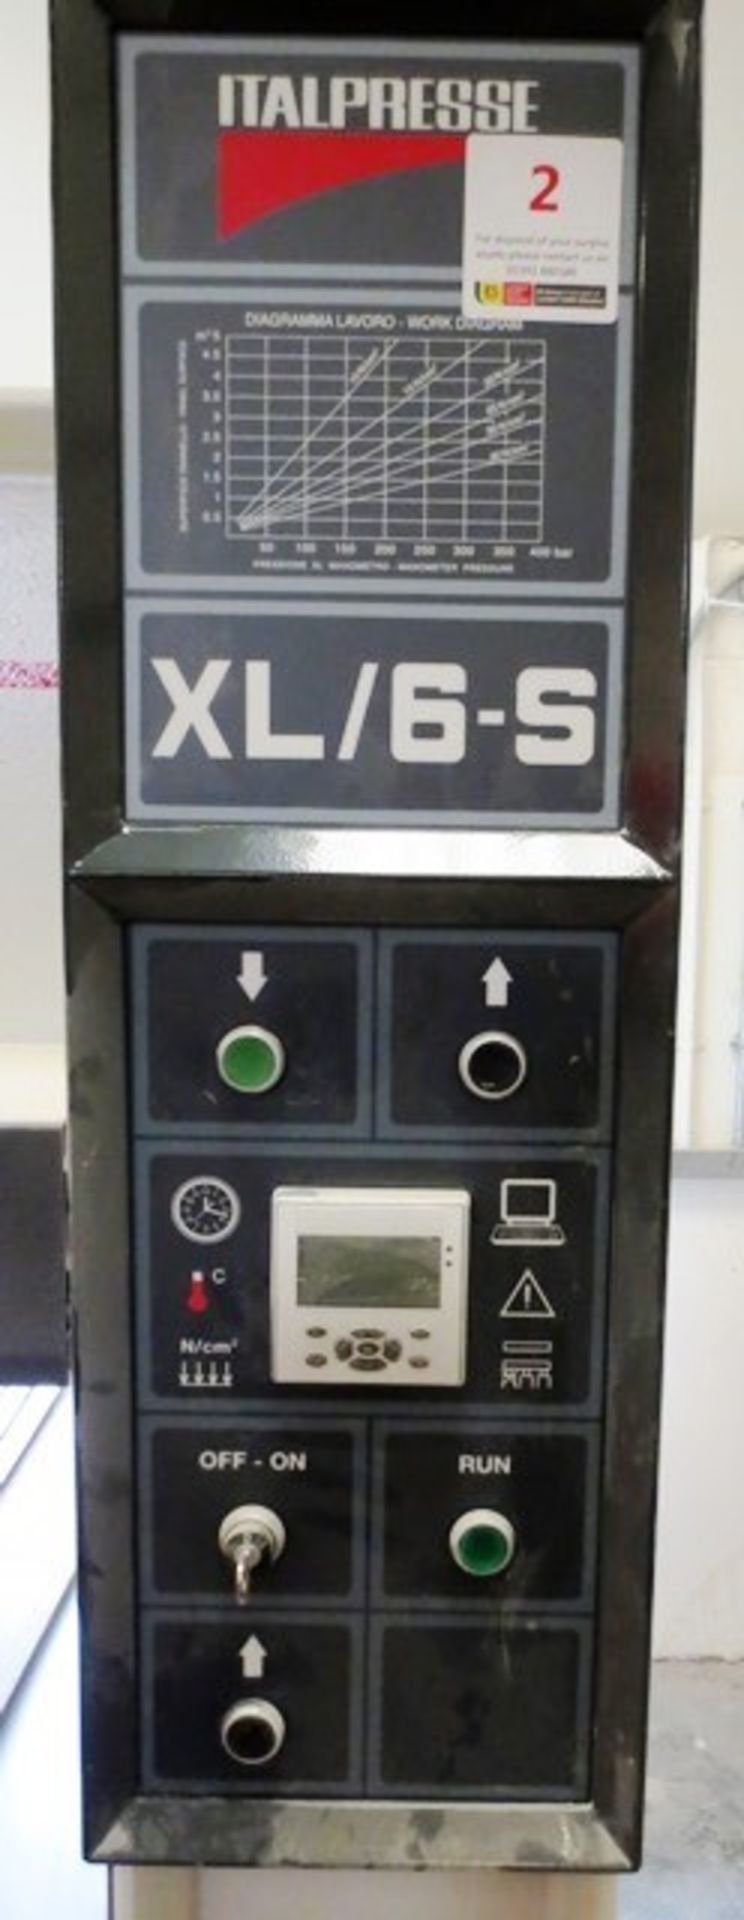 Italpresse Pressa A Caldo hydraulic hot press, machine type: XL/6-S, serial no: 186530315 (2015), - Image 8 of 10